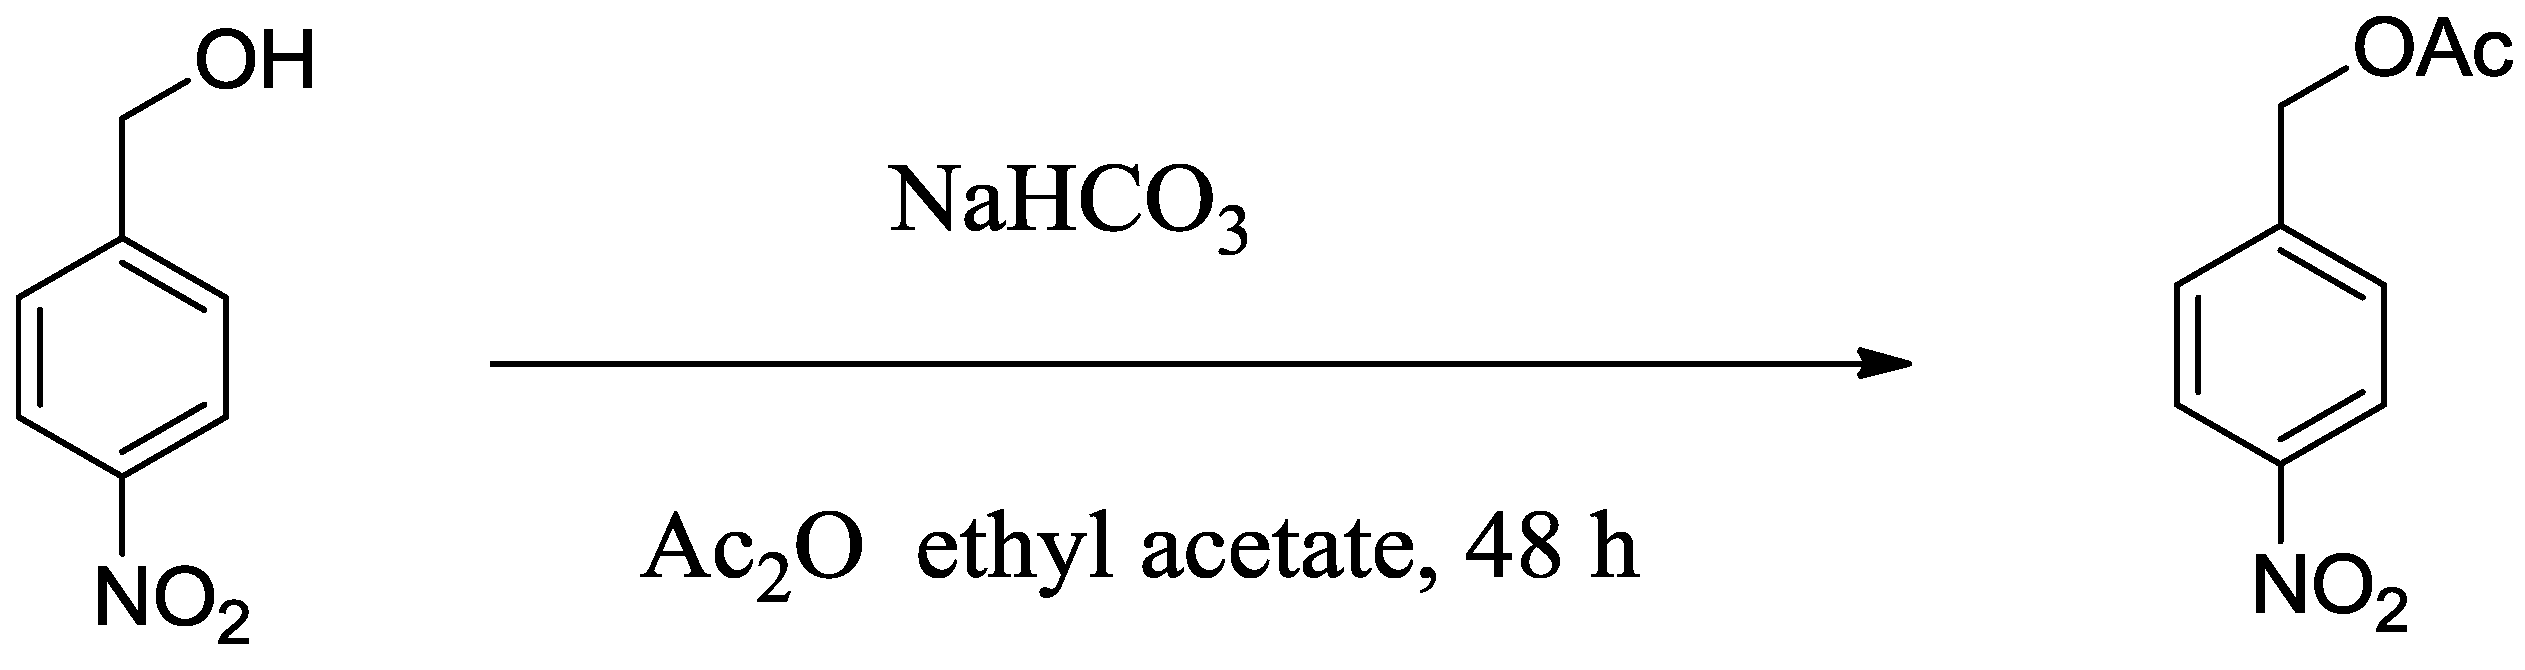 Catalysts 03 00954 g002